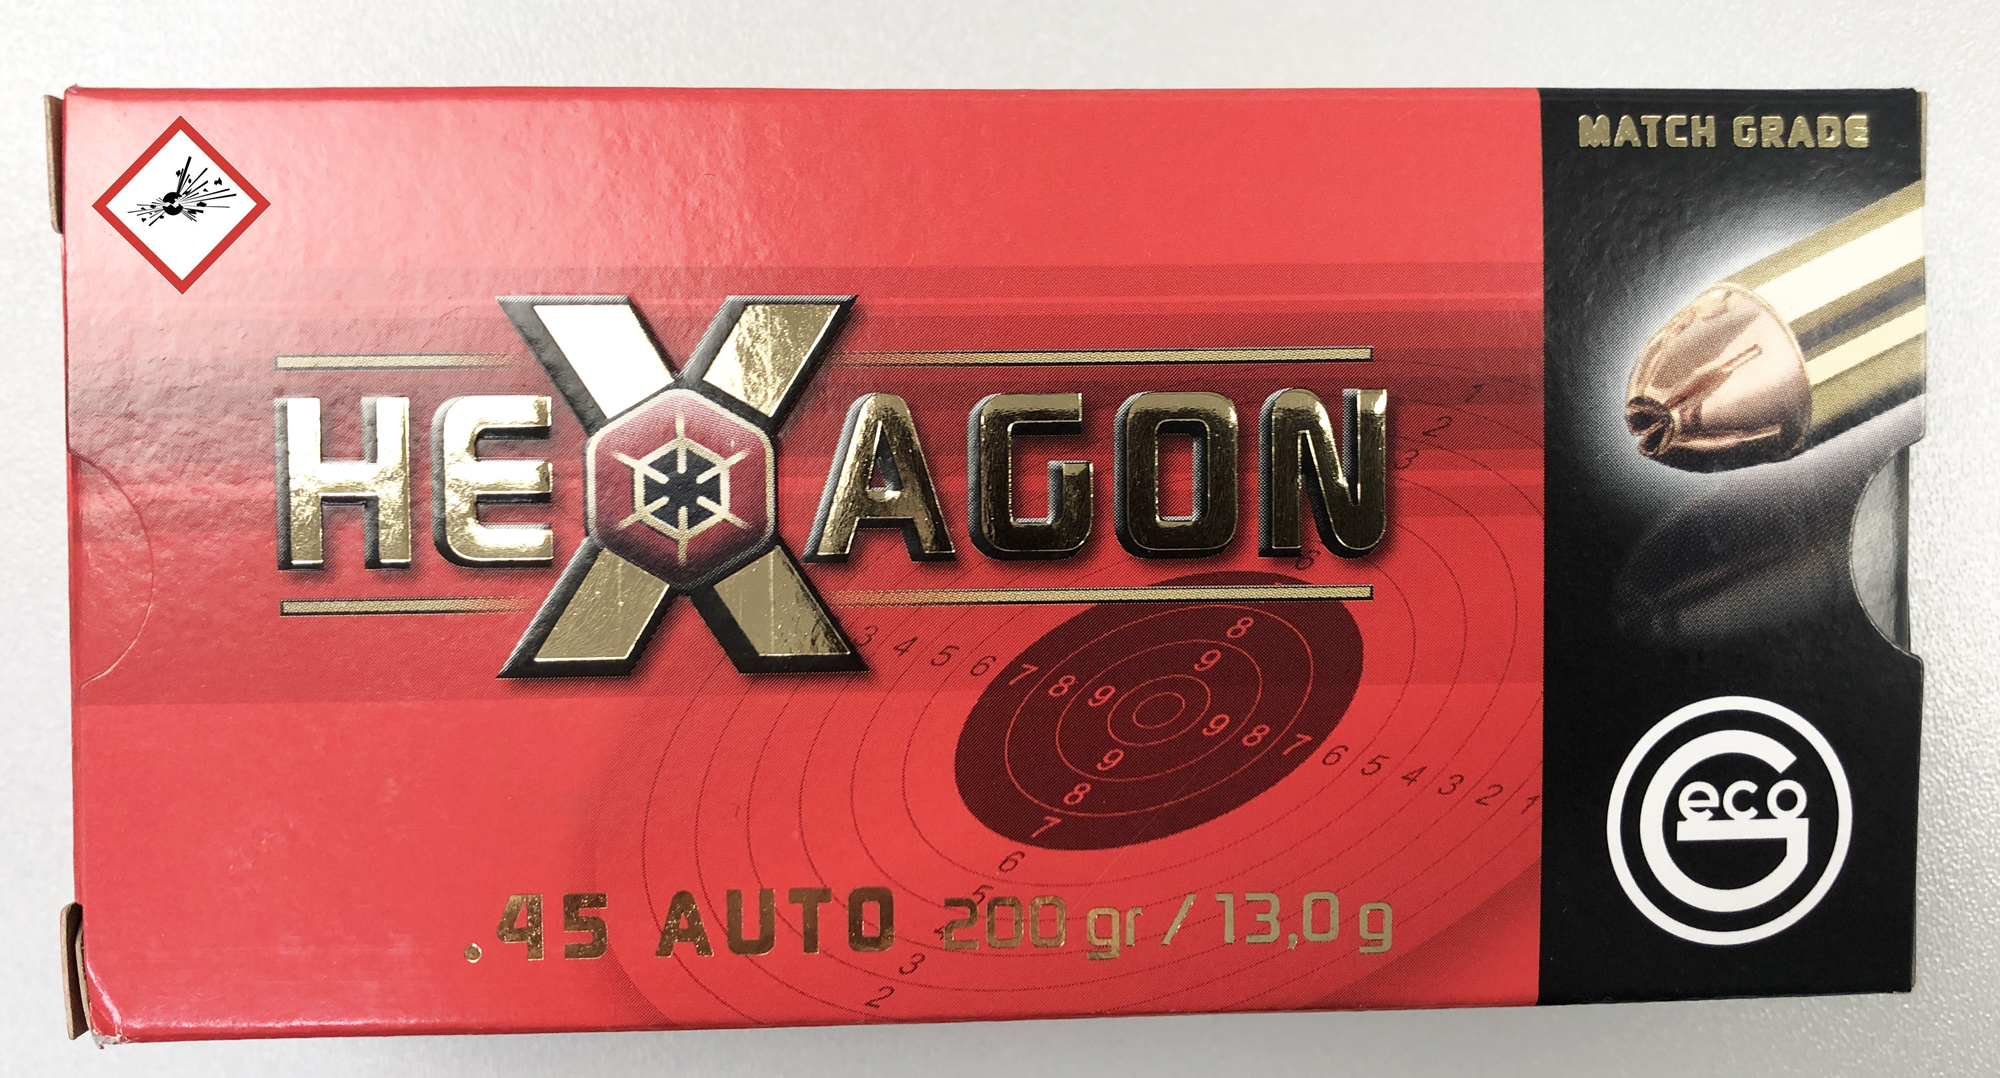 203276_Geco .45 Auto Hexagon 200grs